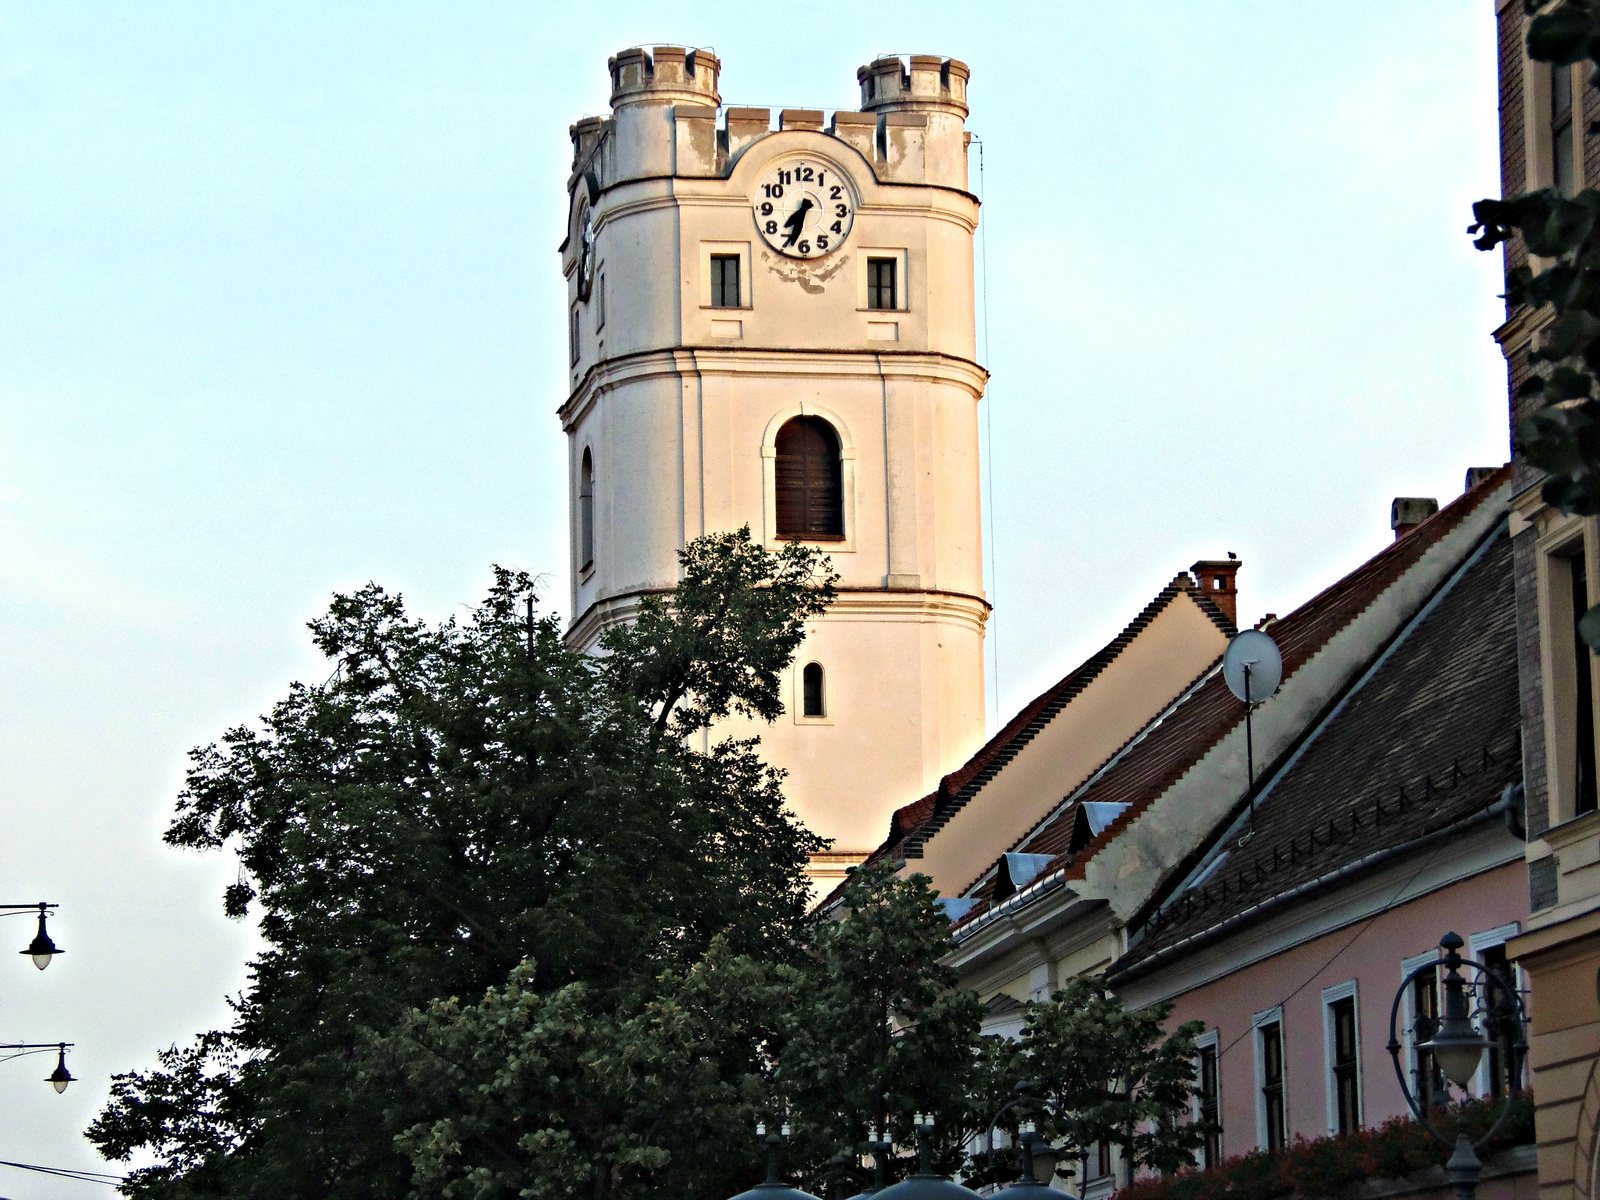 Debrecen Csonka torony